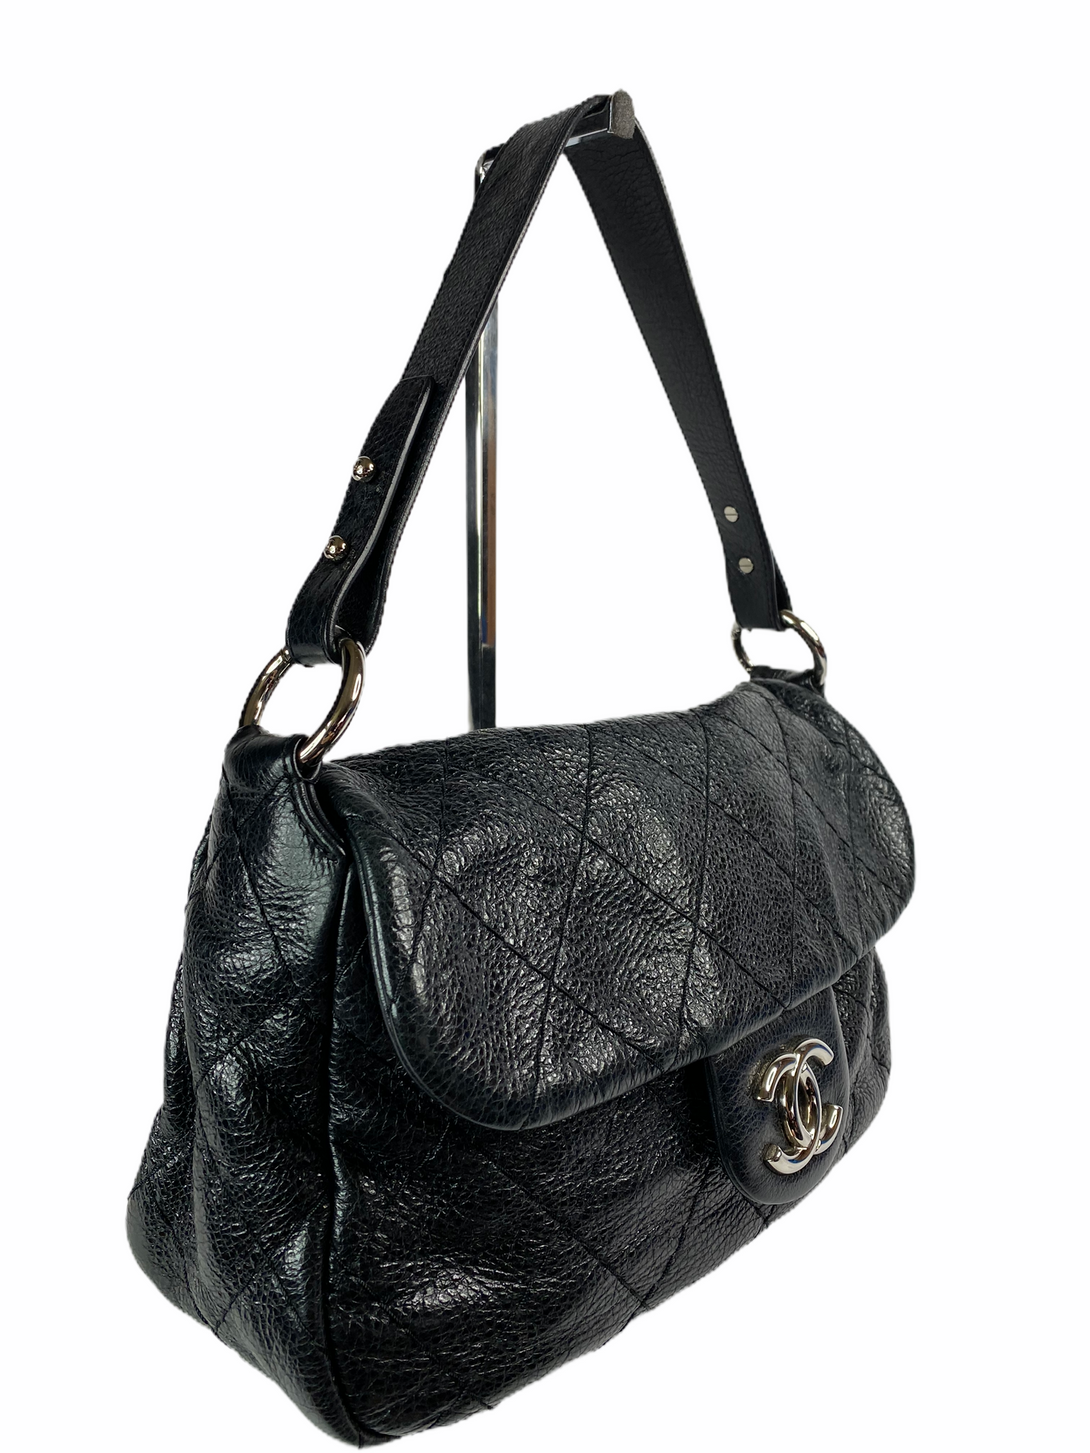 Chanel Black Caviar Leather Shoulder Bag - Siopaella Designer Exchange